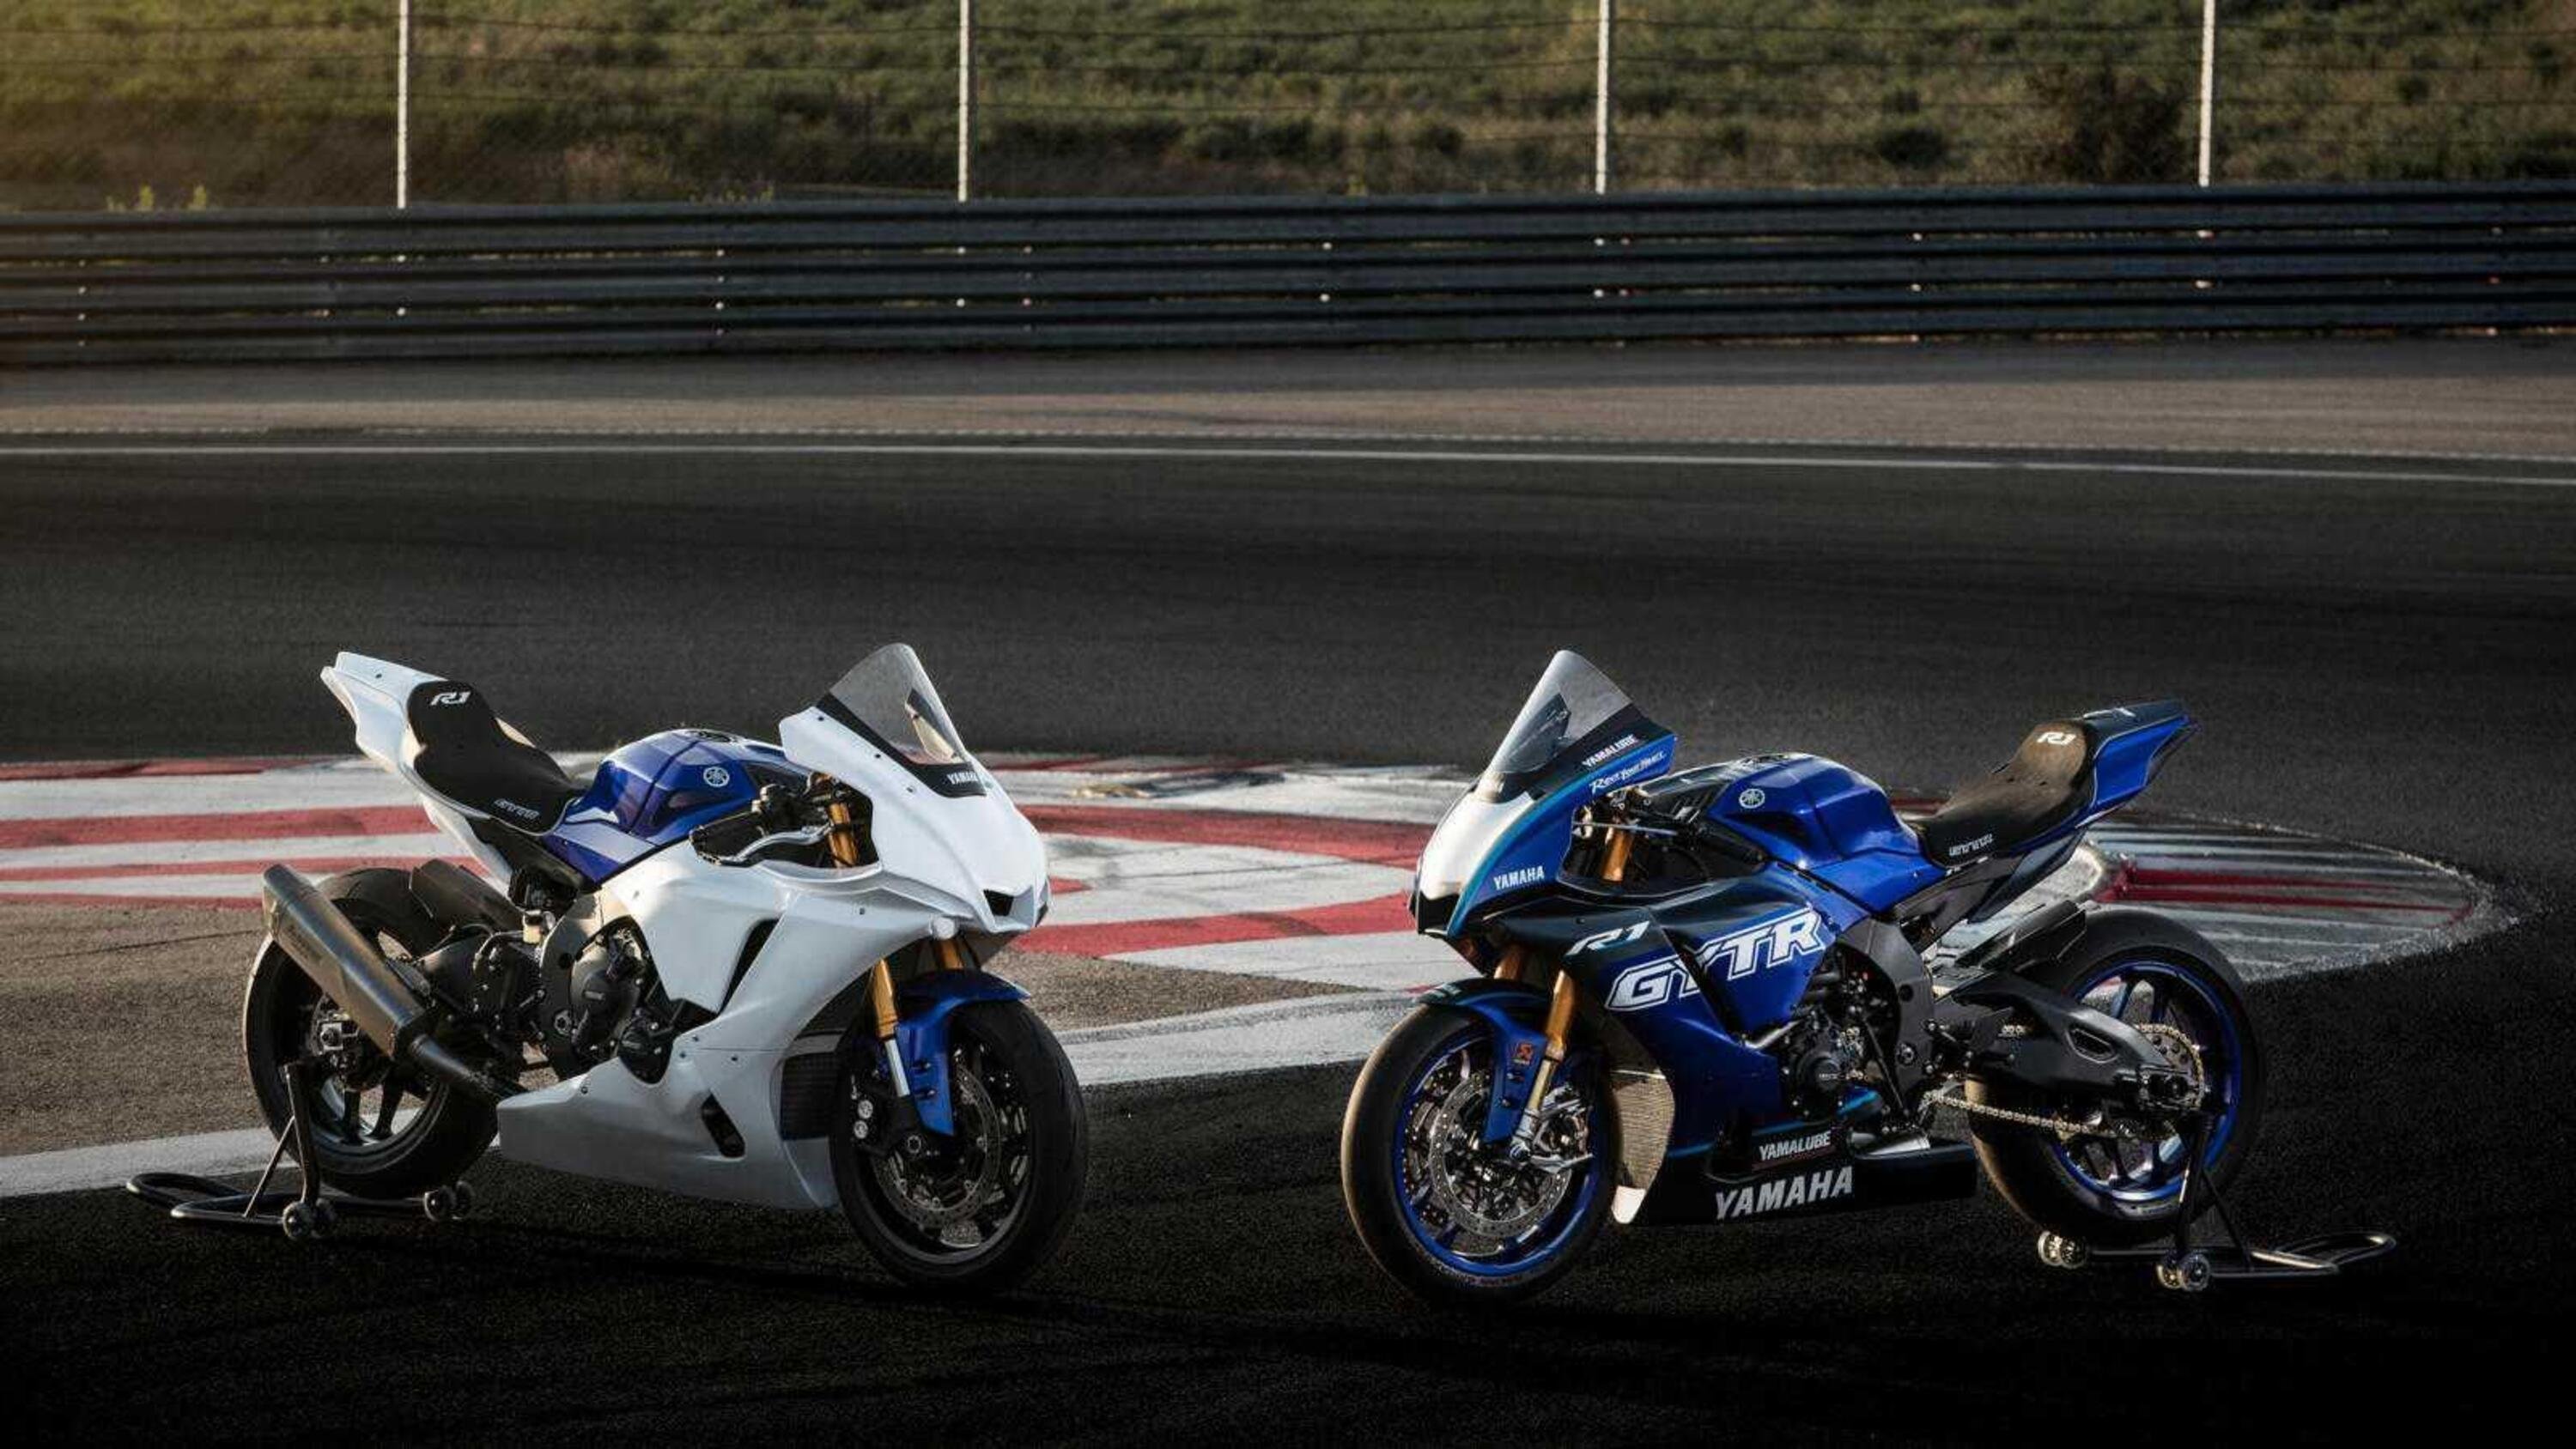 R1 GYTR: Yamaha si ispira alla SBK per offrire moto a uso pista